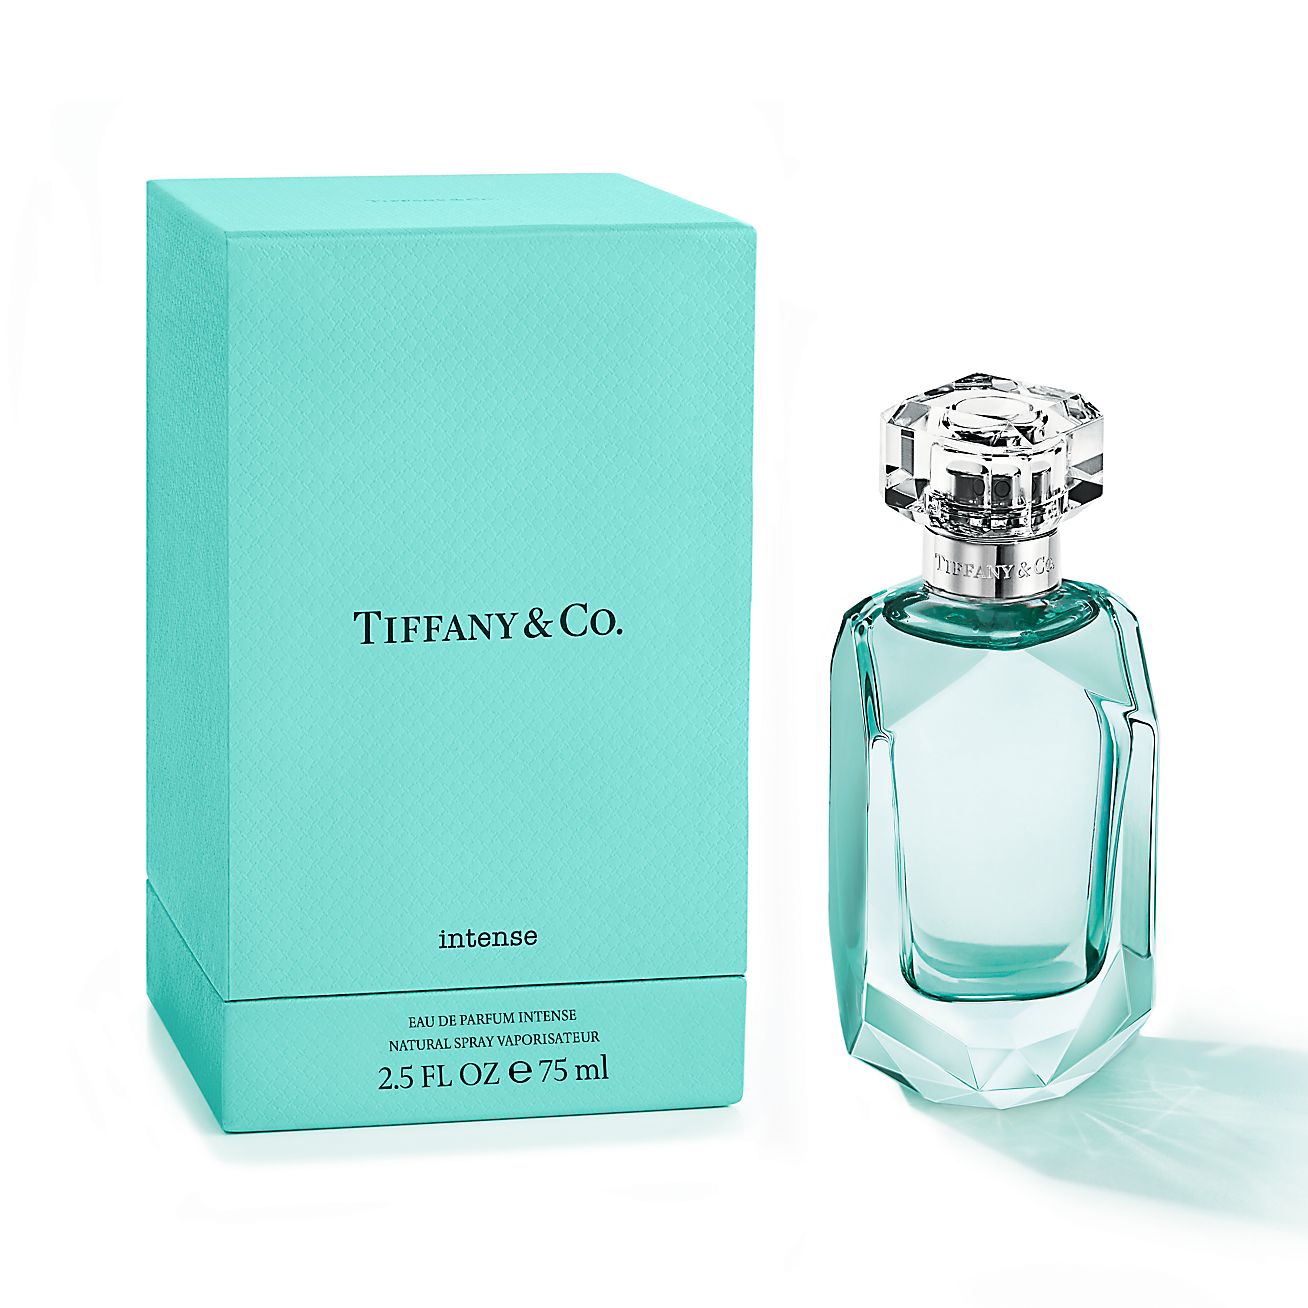 Tiffany Eau de Parfum Intense, 2.5 